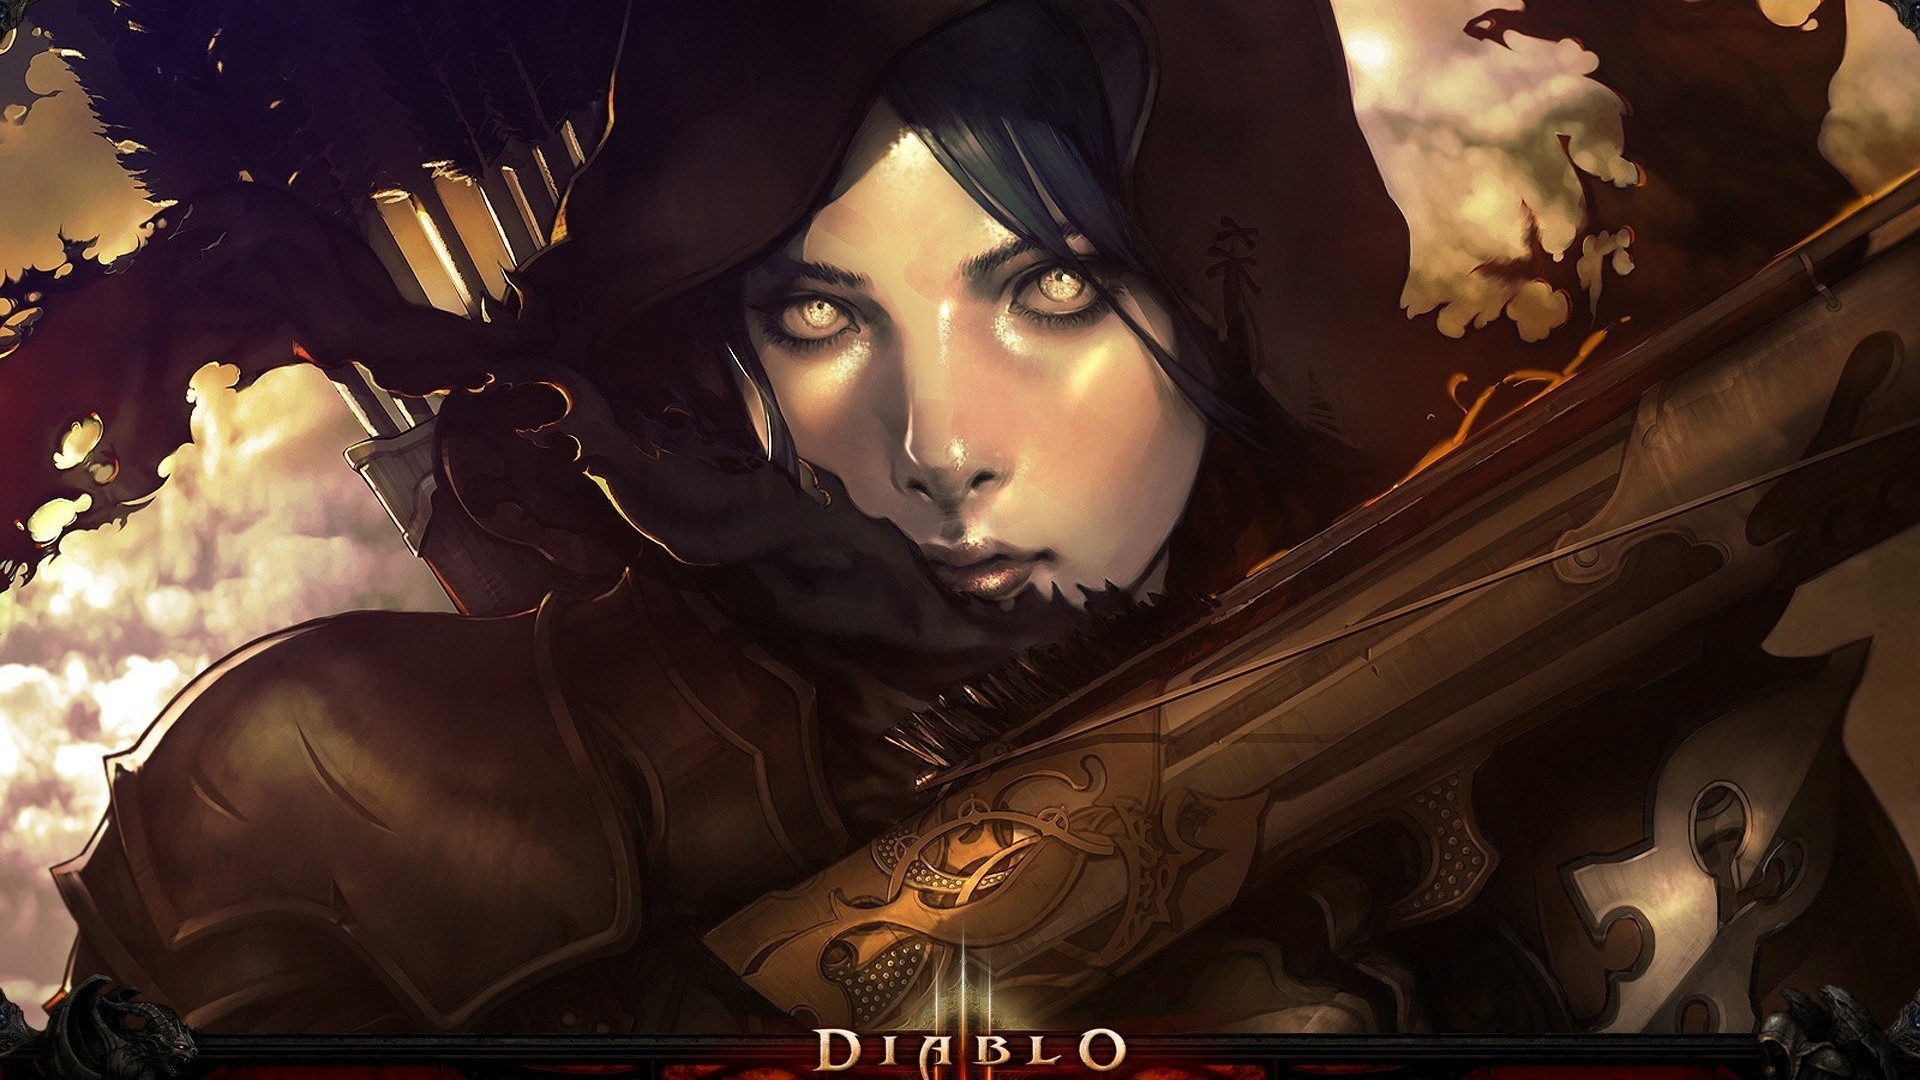 Diablo III Character for 1920 x 1080 HDTV 1080p resolution